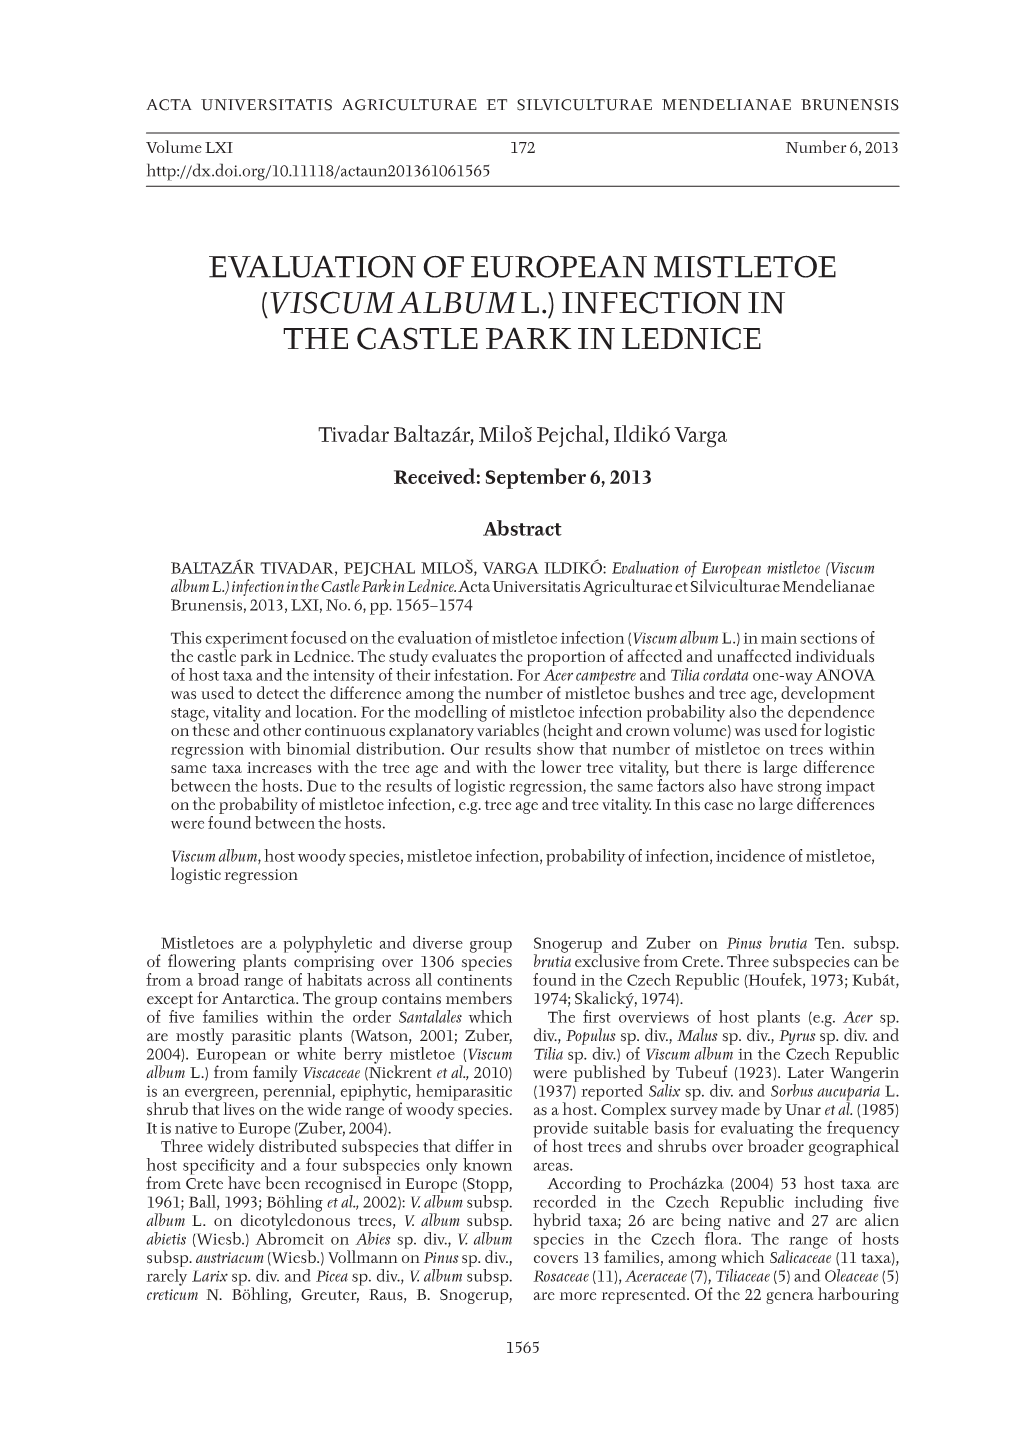 Evaluation of European Mistletoe (Viscum Album L.) Infection in the Castle Park in Lednice